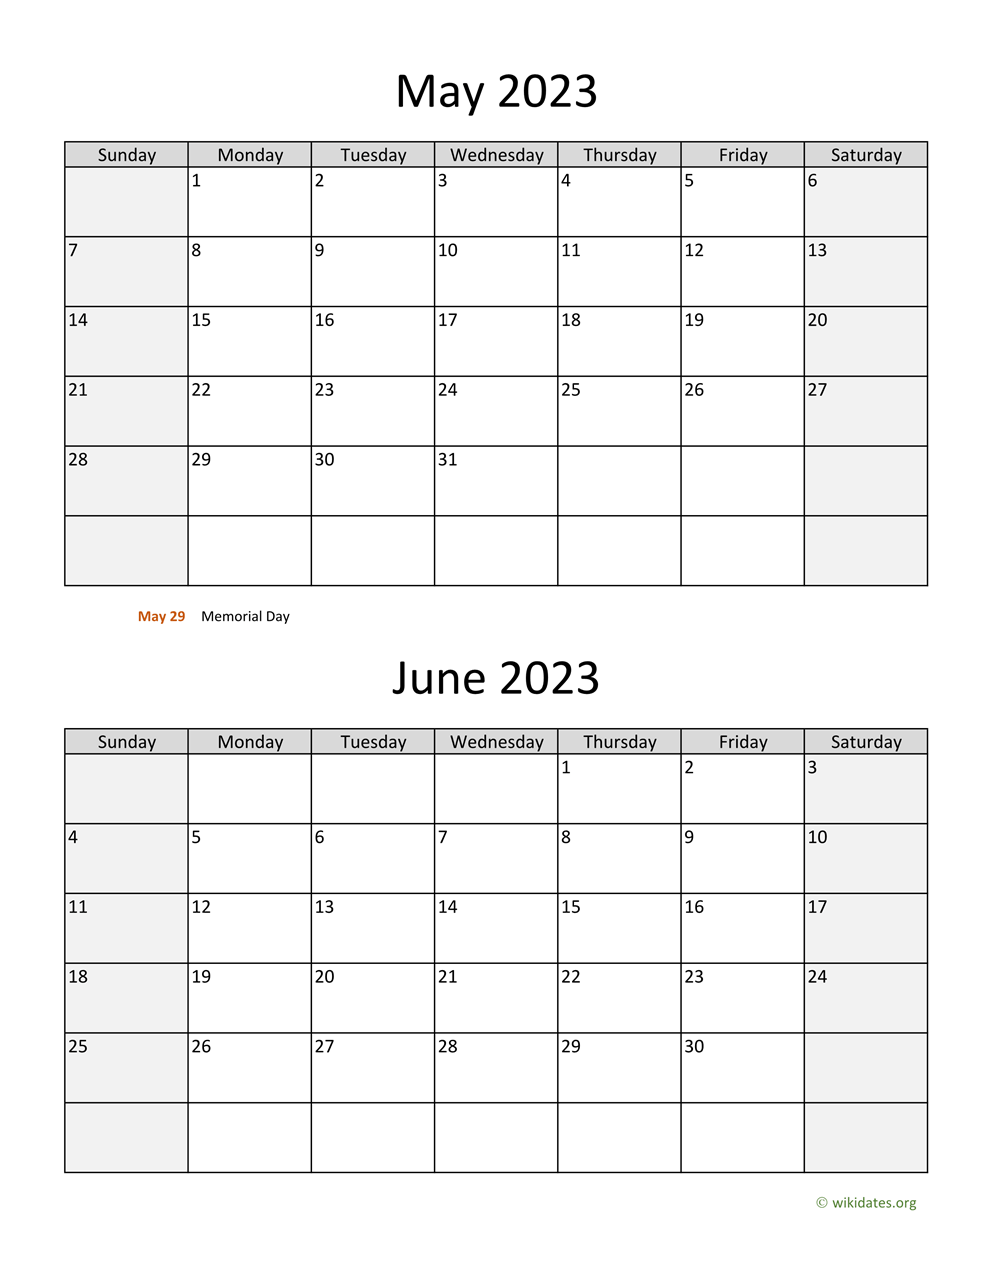 printable-august-2023-calendar-free-printable-calendars